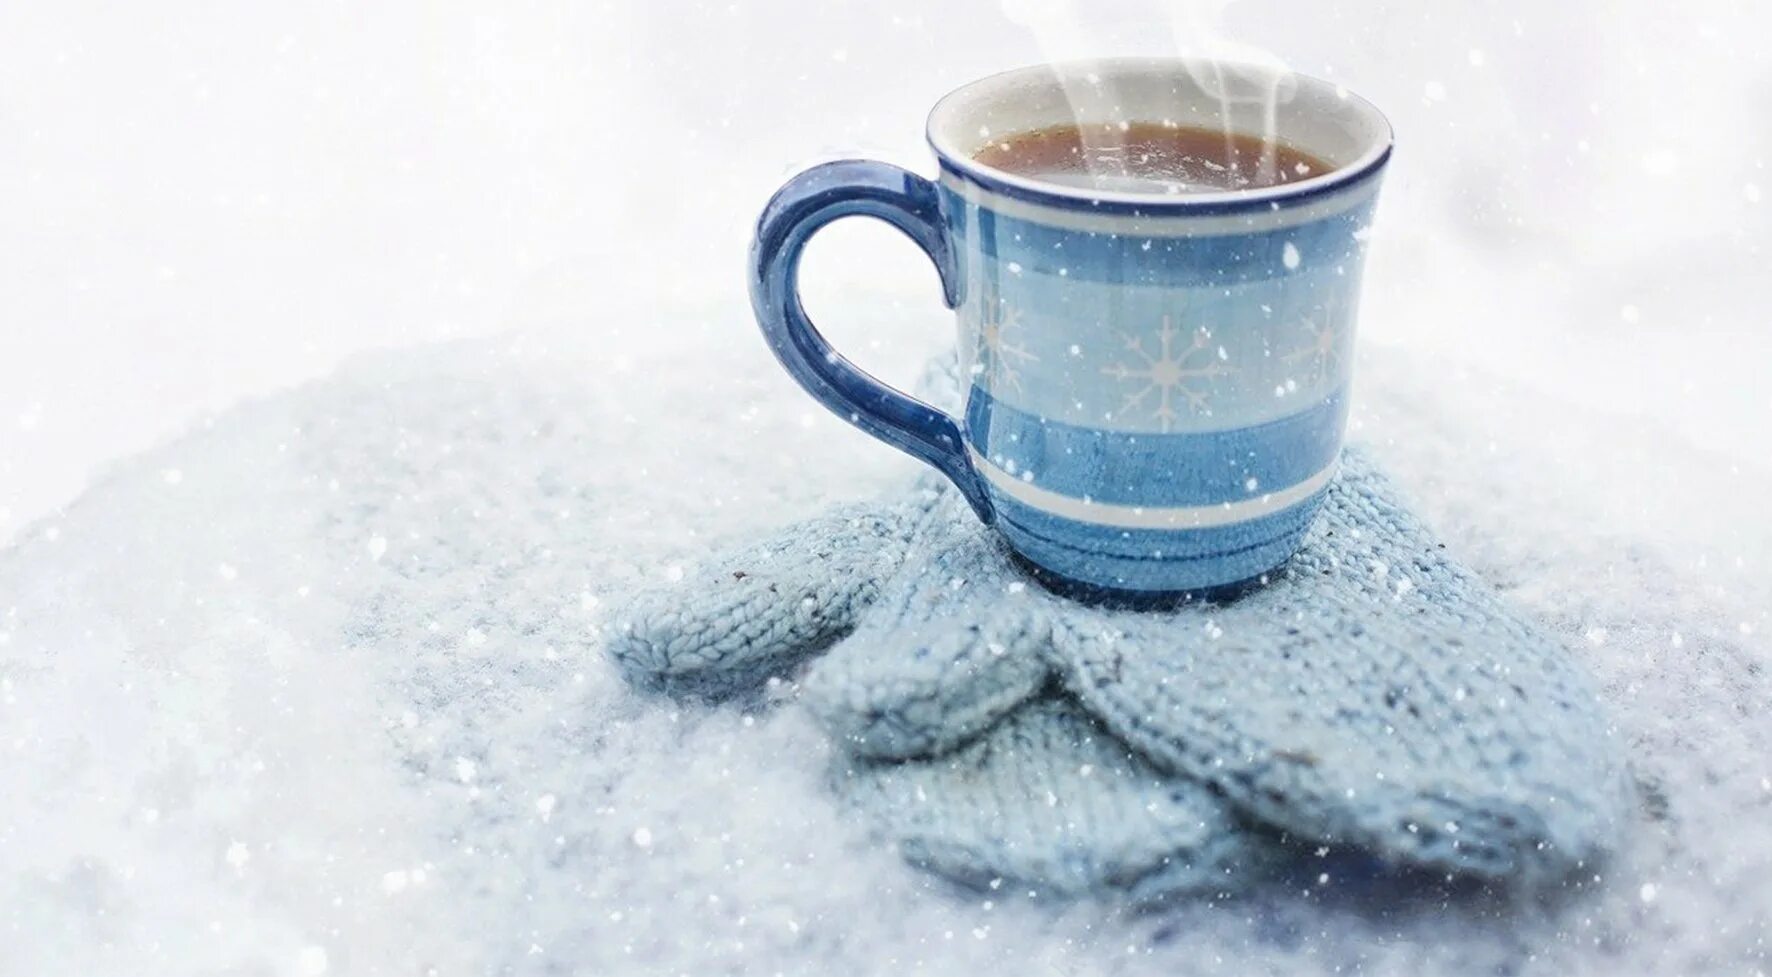 Доброе утро вторника зима картинки. Чай зимний. Снежное утро. Горячий чай зимой. Зимнее утро с чашкой чая.